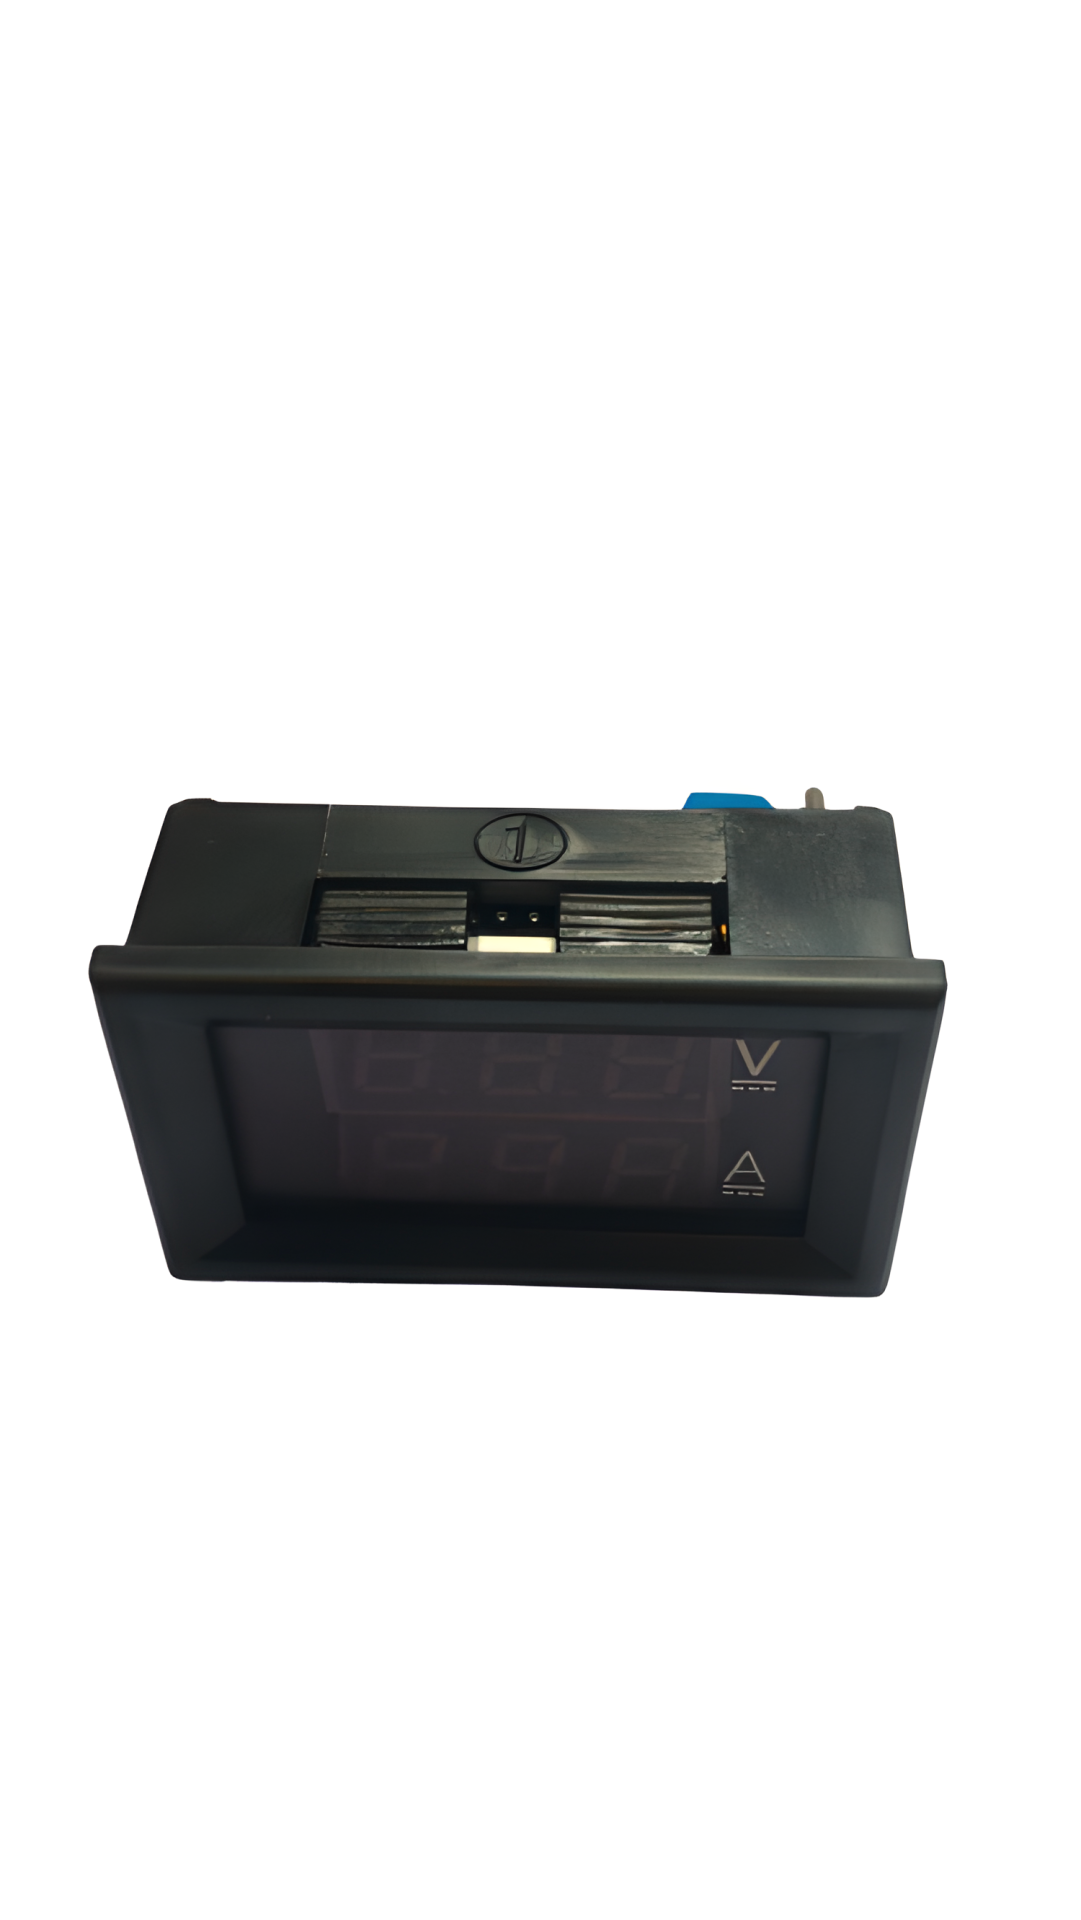 Dijital Voltmetre ve Ampermetre (100V - 10A) - 2